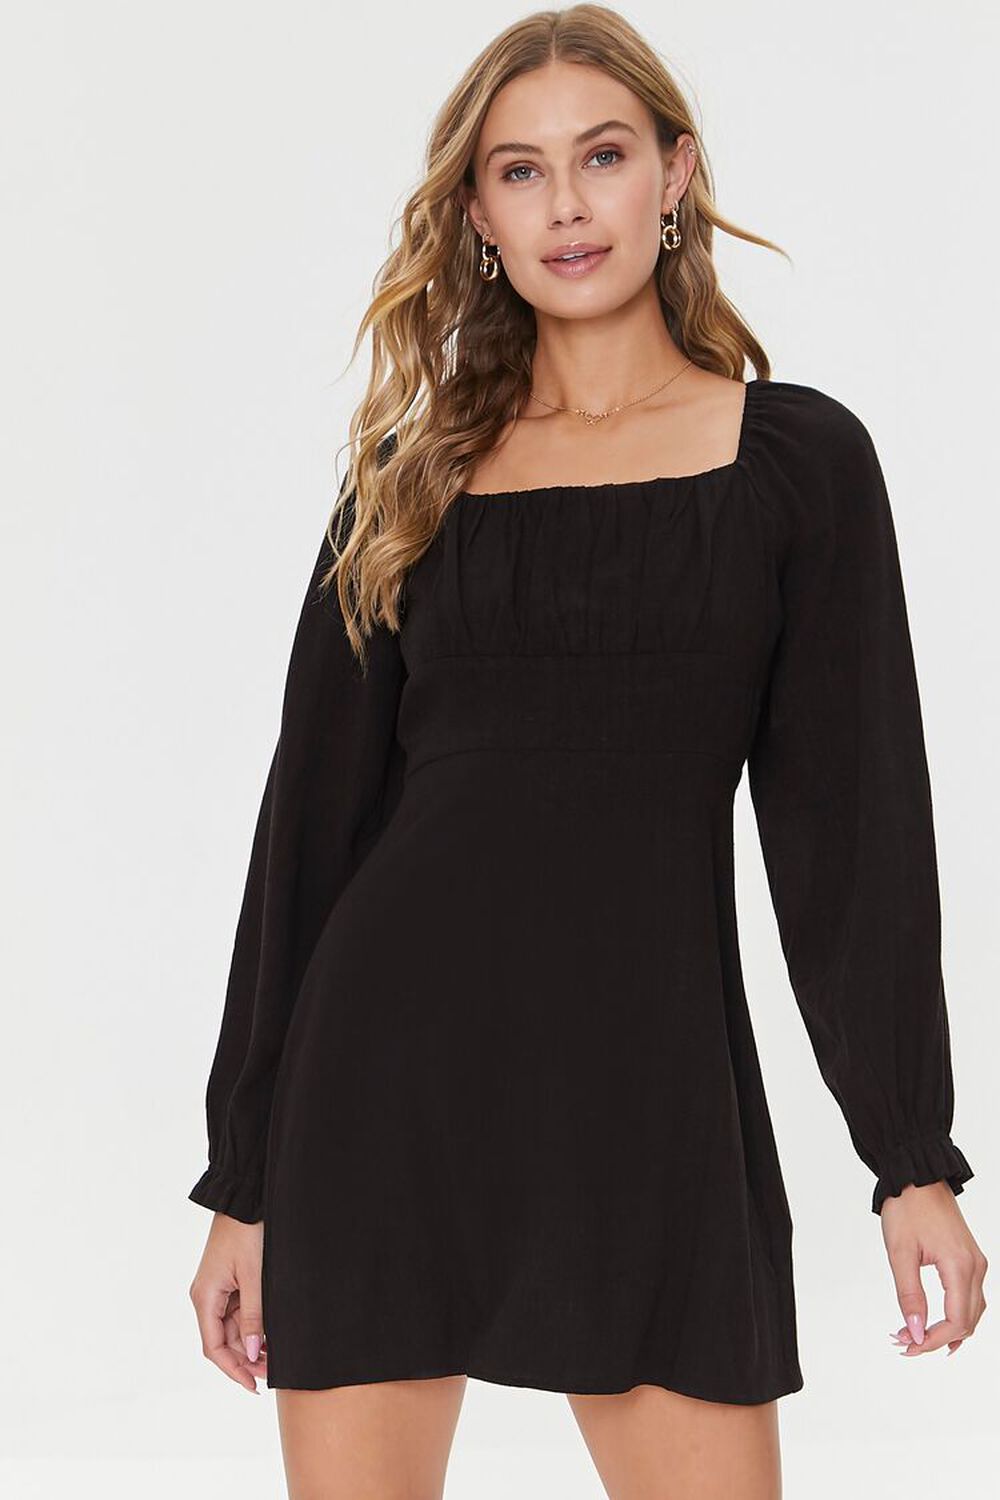 BLACK Fit & Flare Mini Dress, image 1